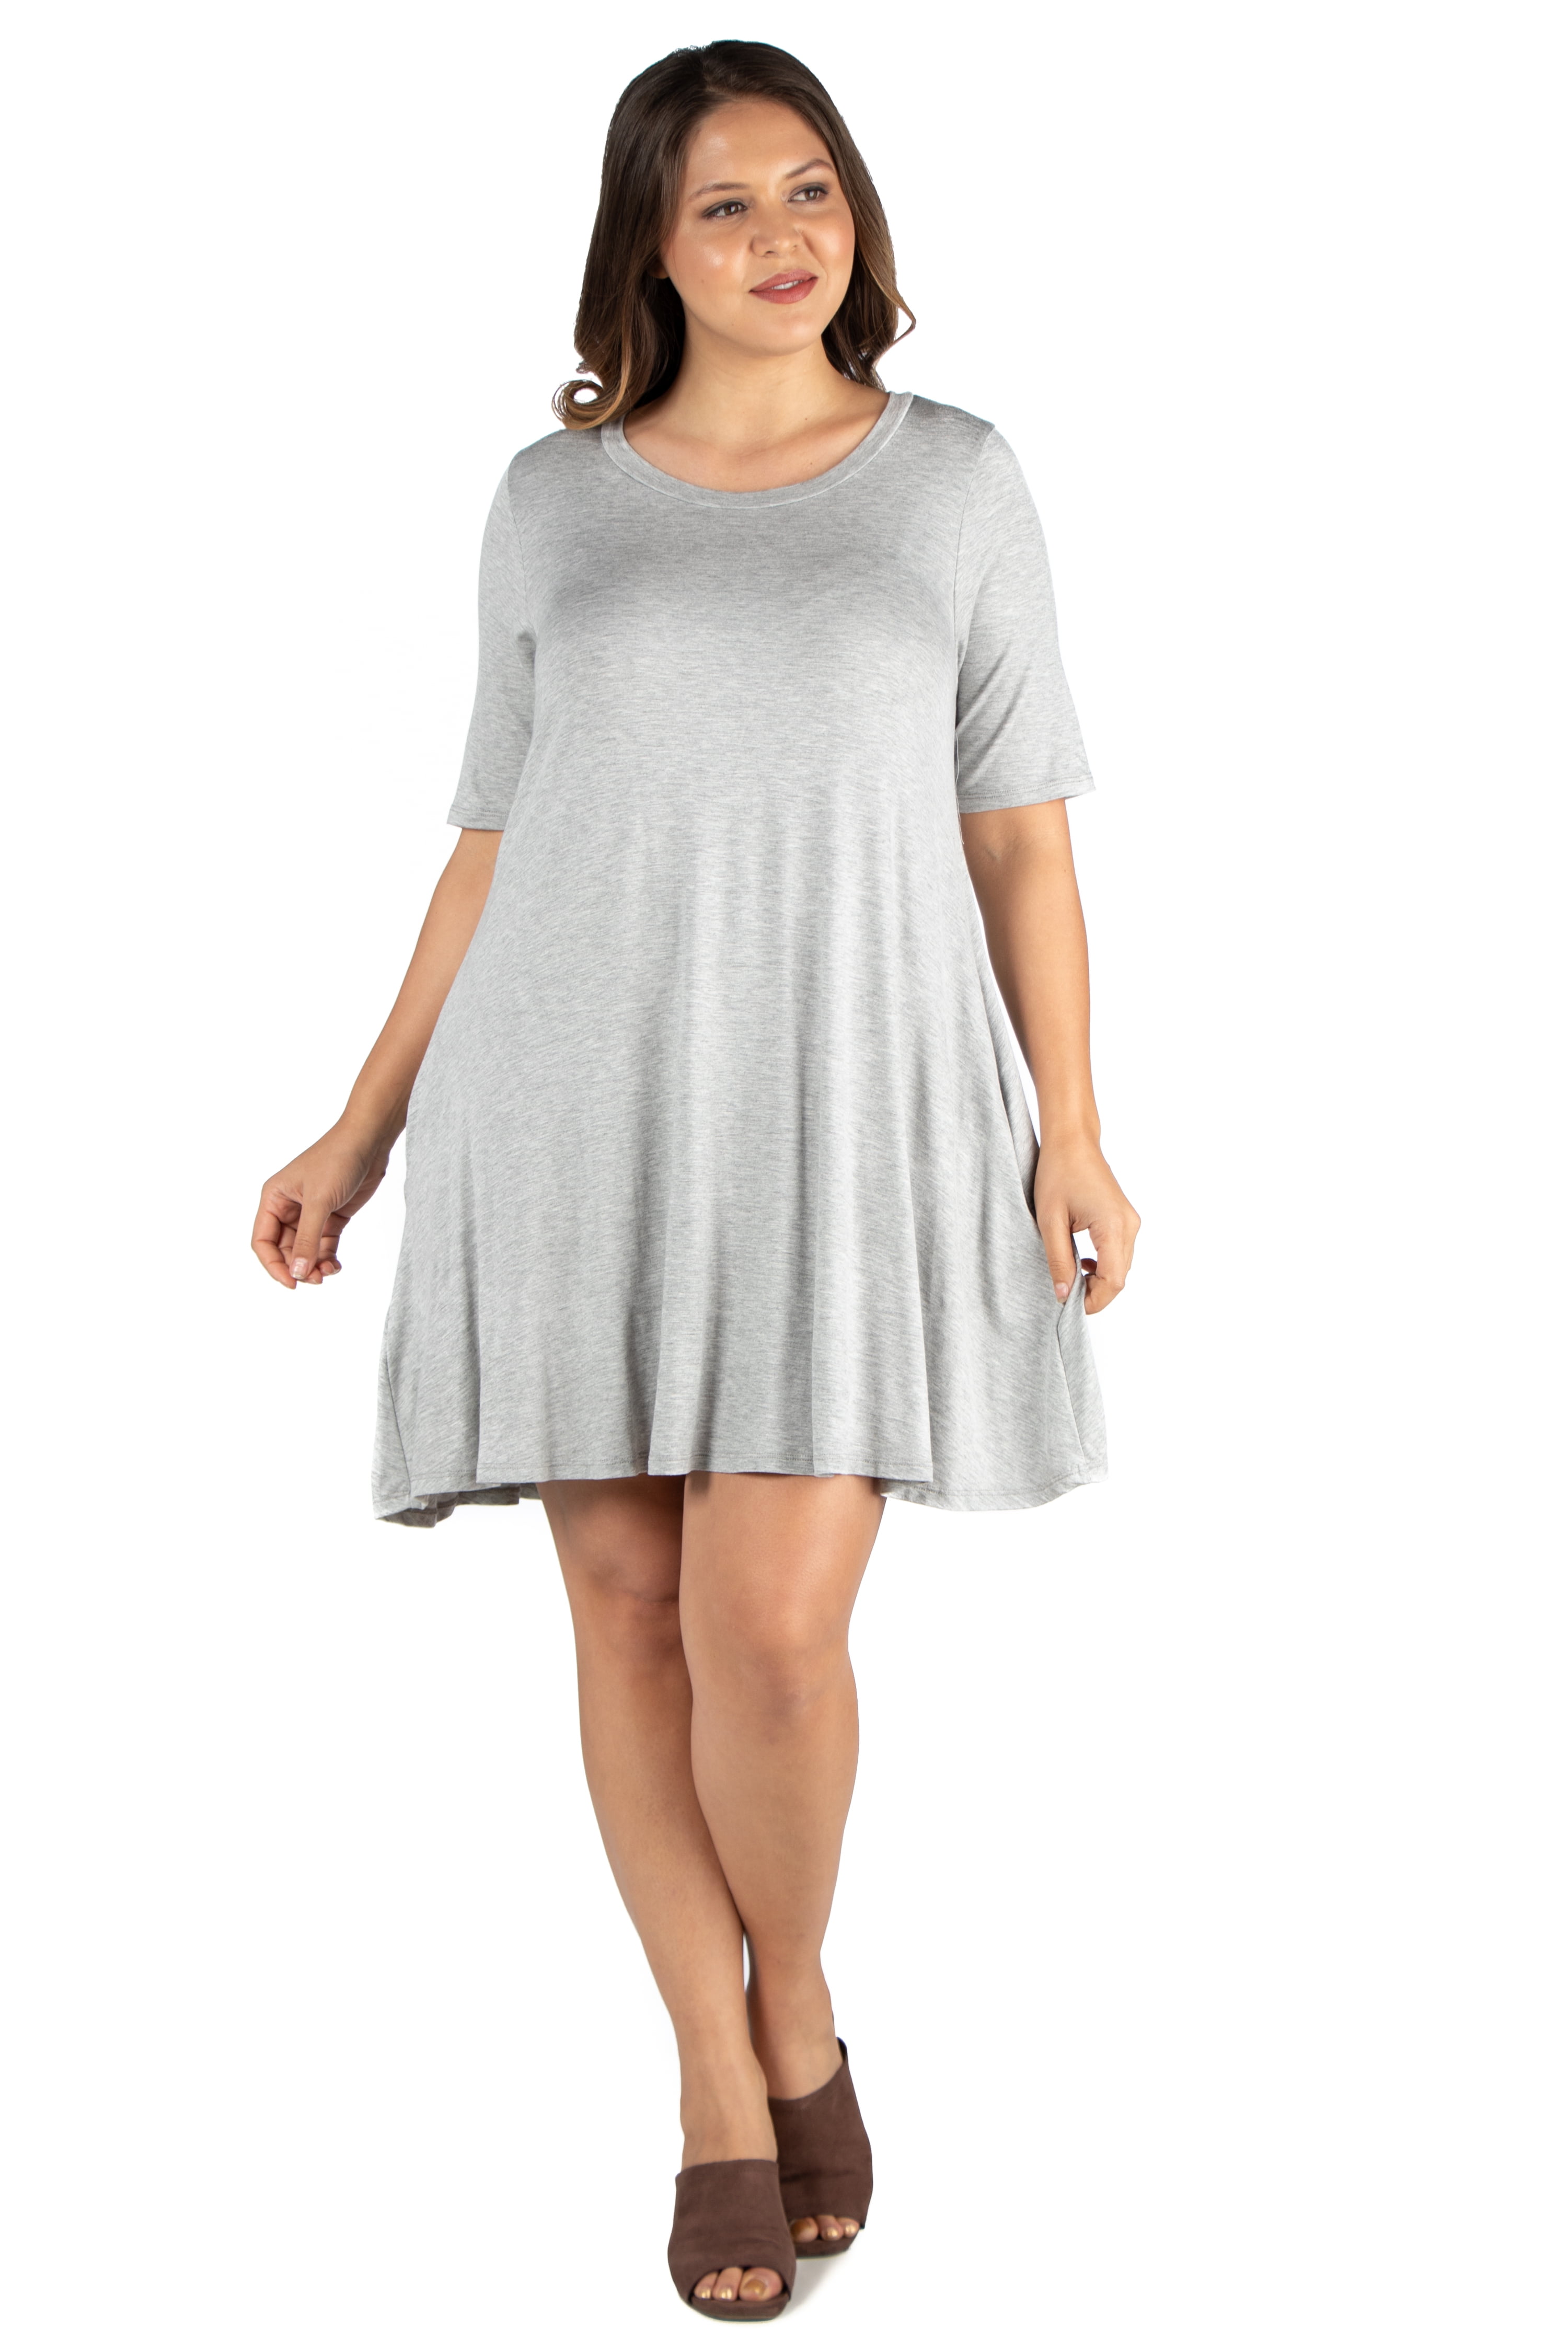 Women’s Plus Size Knee Length Pocket T Shirt Dress - Walmart.com